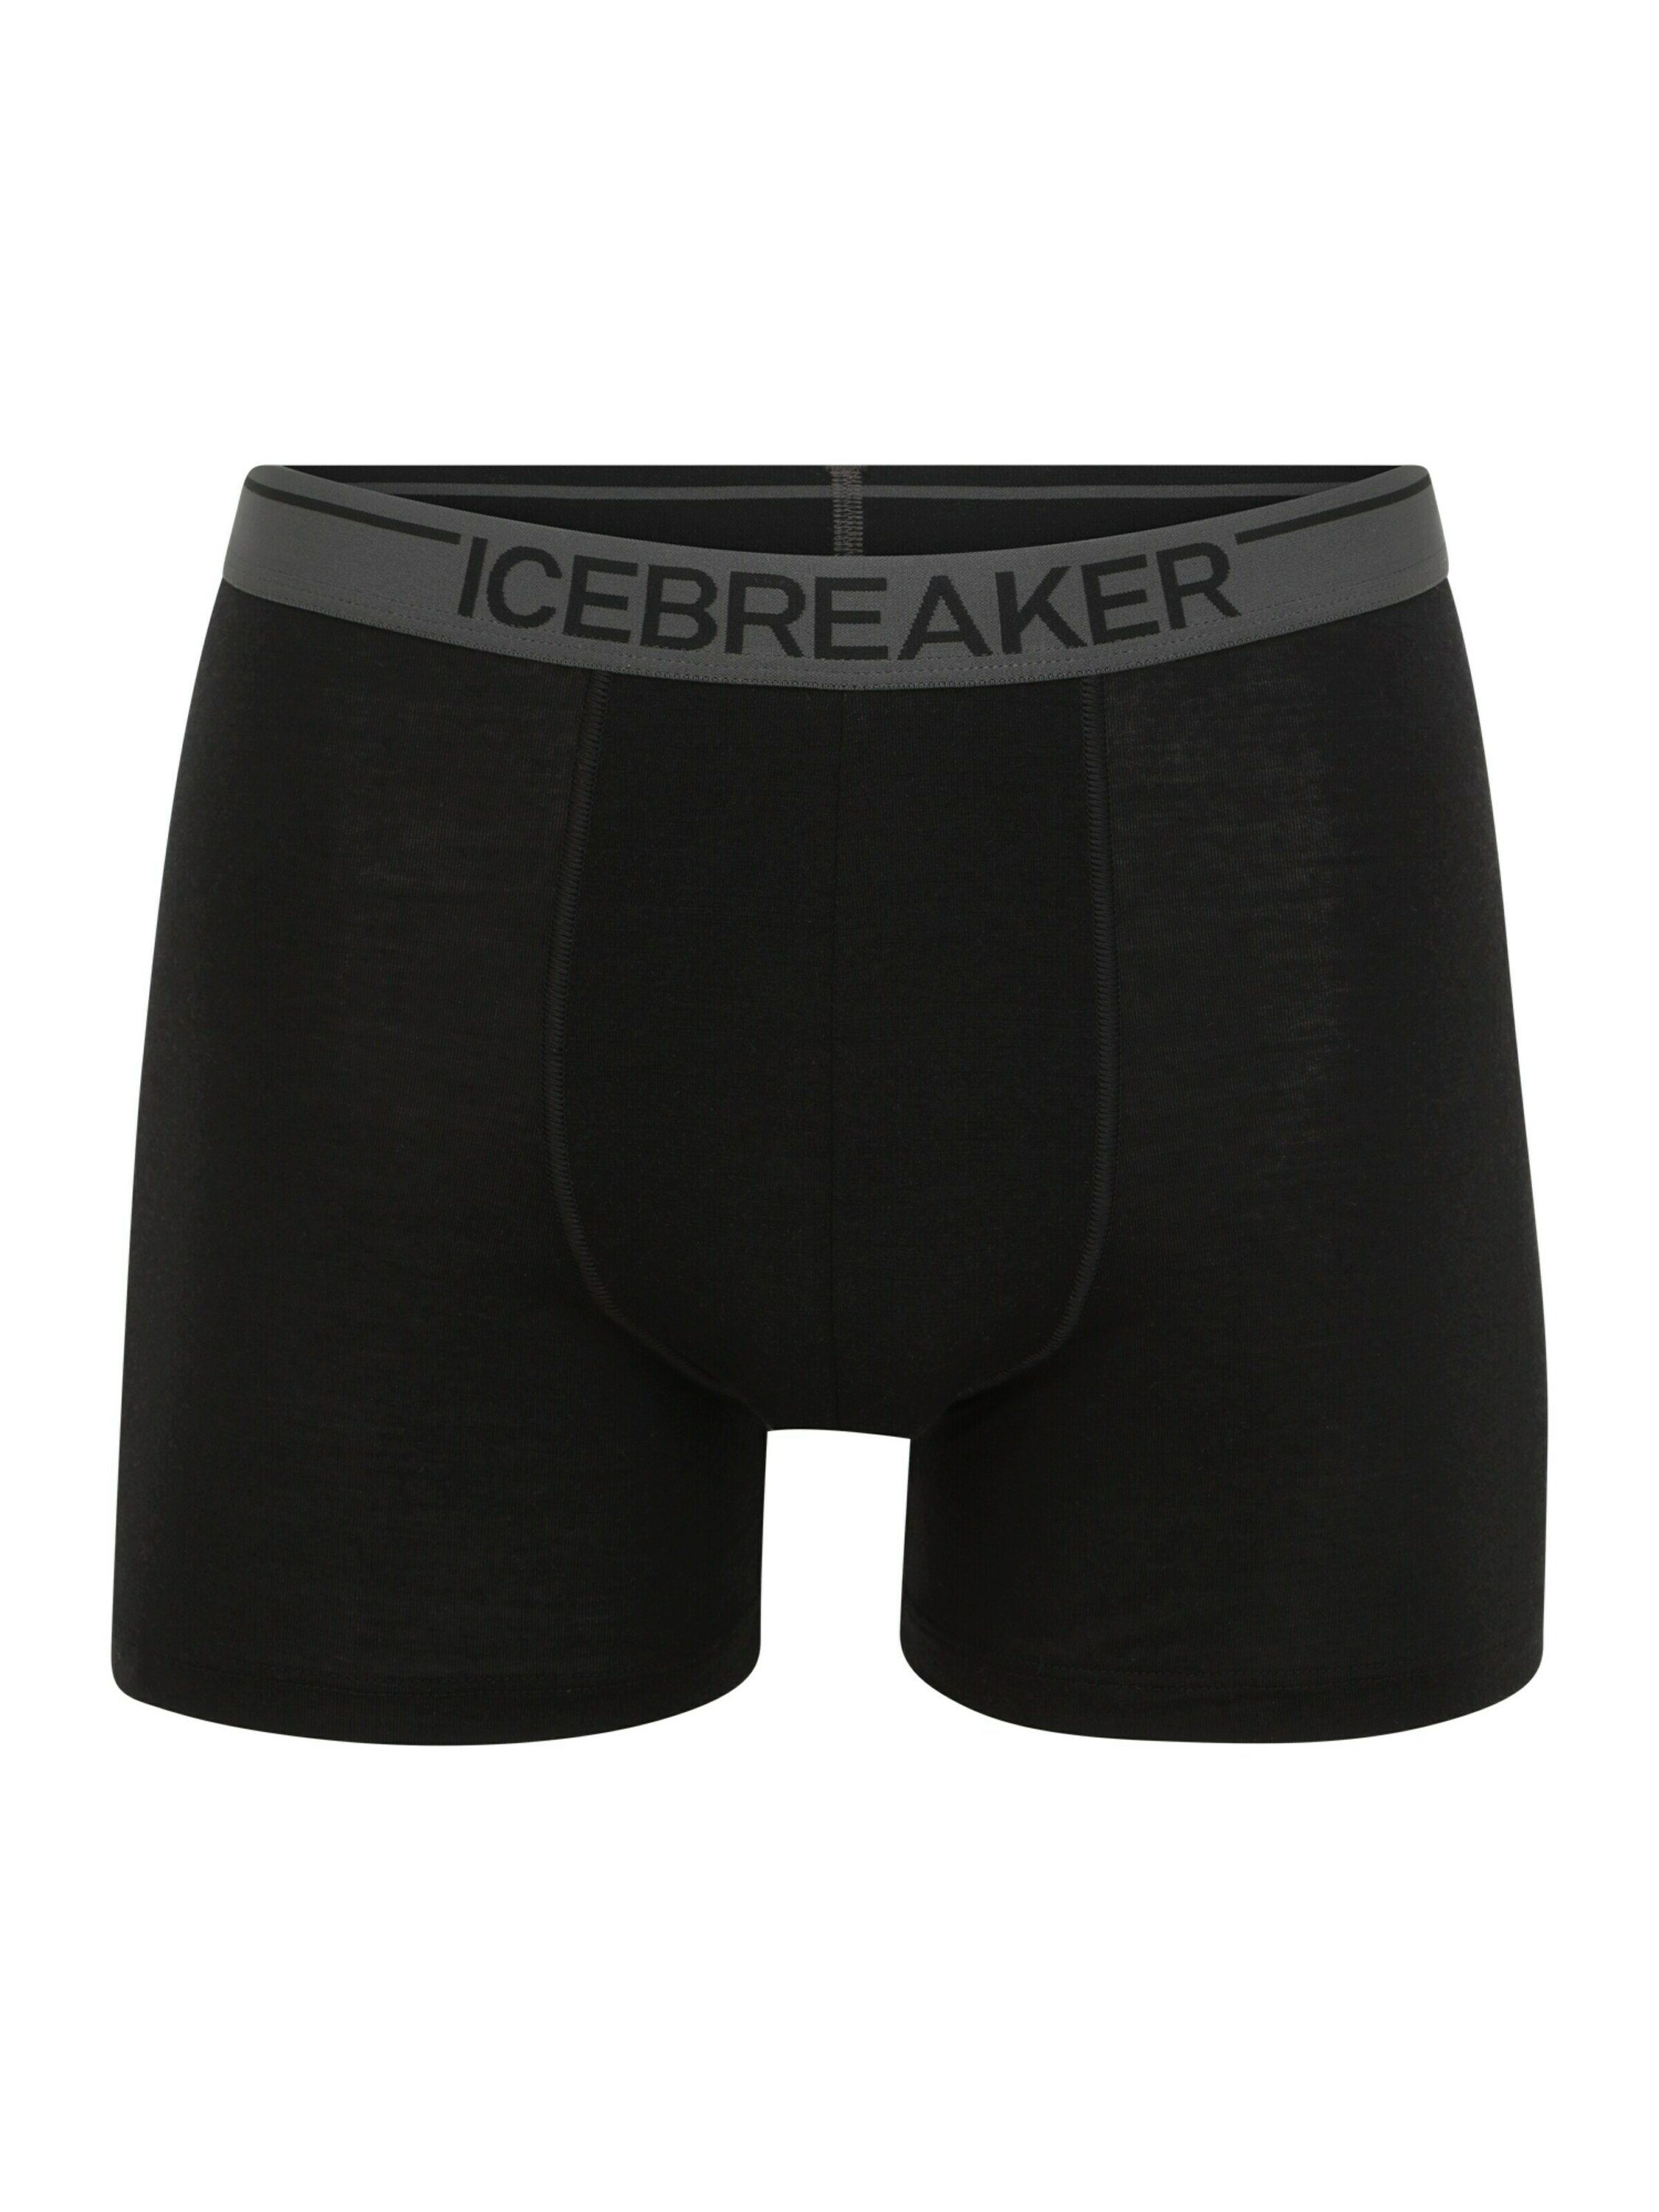 BLACK-010 (1-St) Icebreaker Anatomica Boxershorts